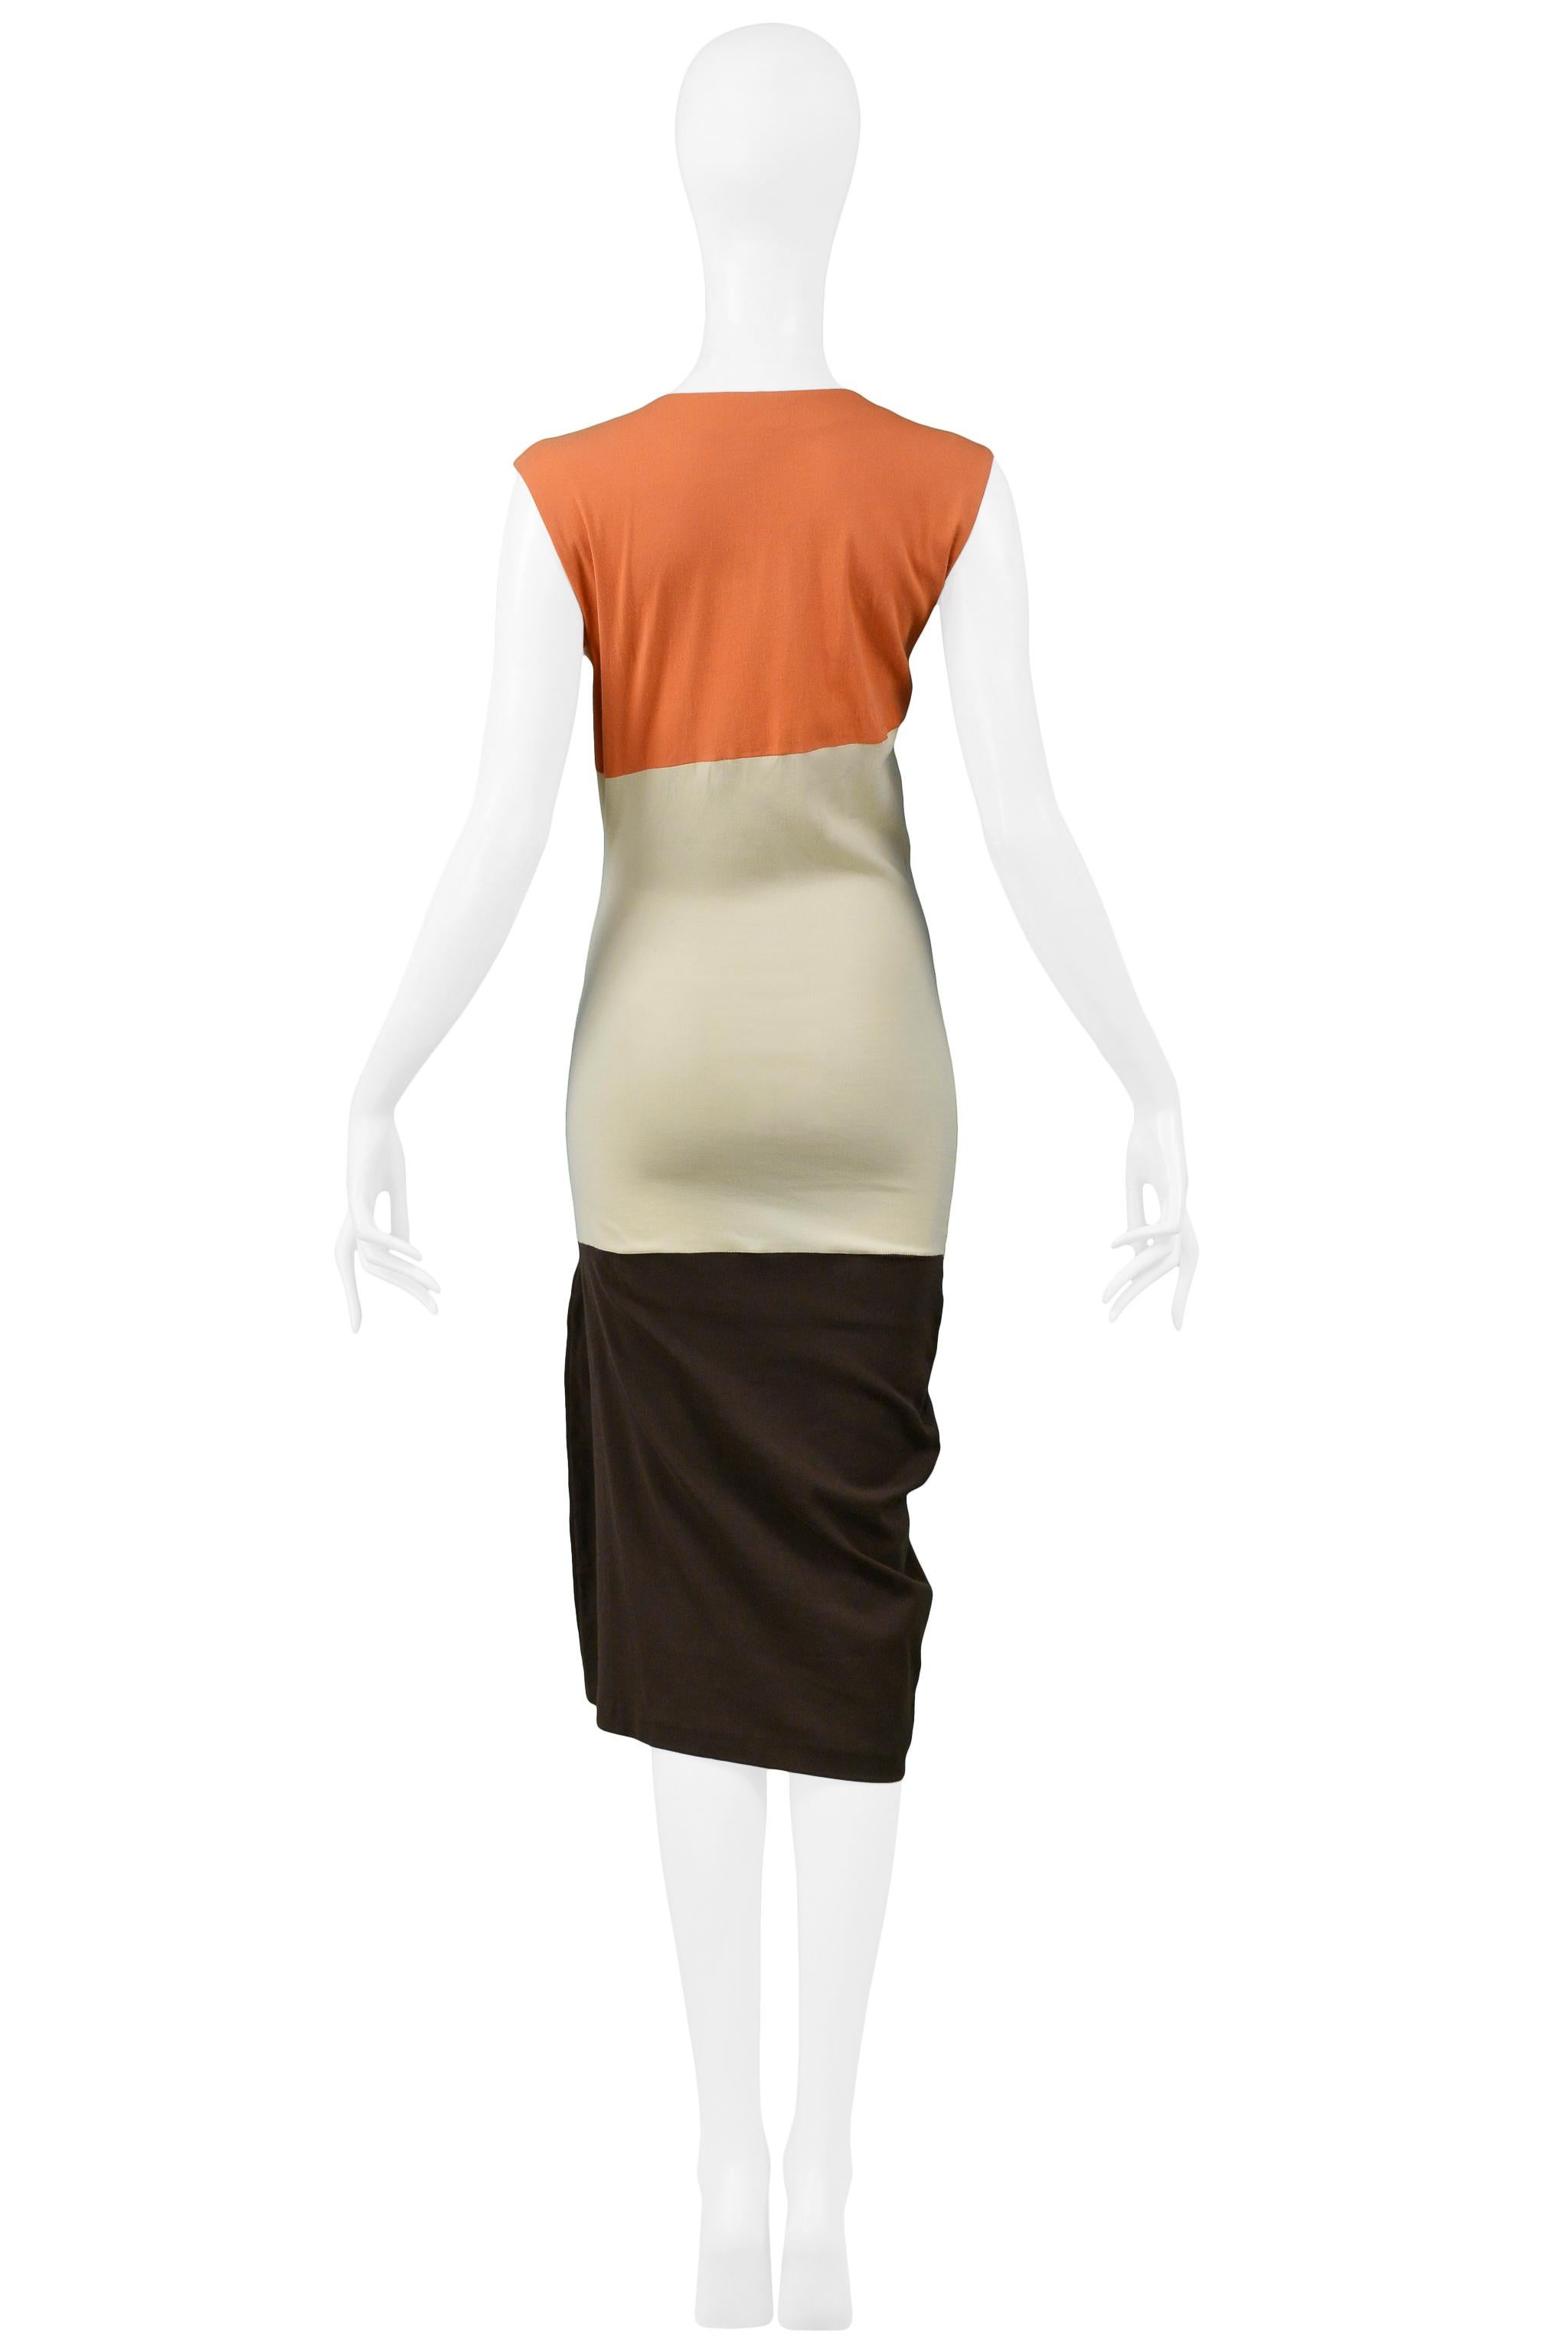 Helmut Lang Coral Ivory & Brown Color Block Knit Dress 1990 For Sale 1